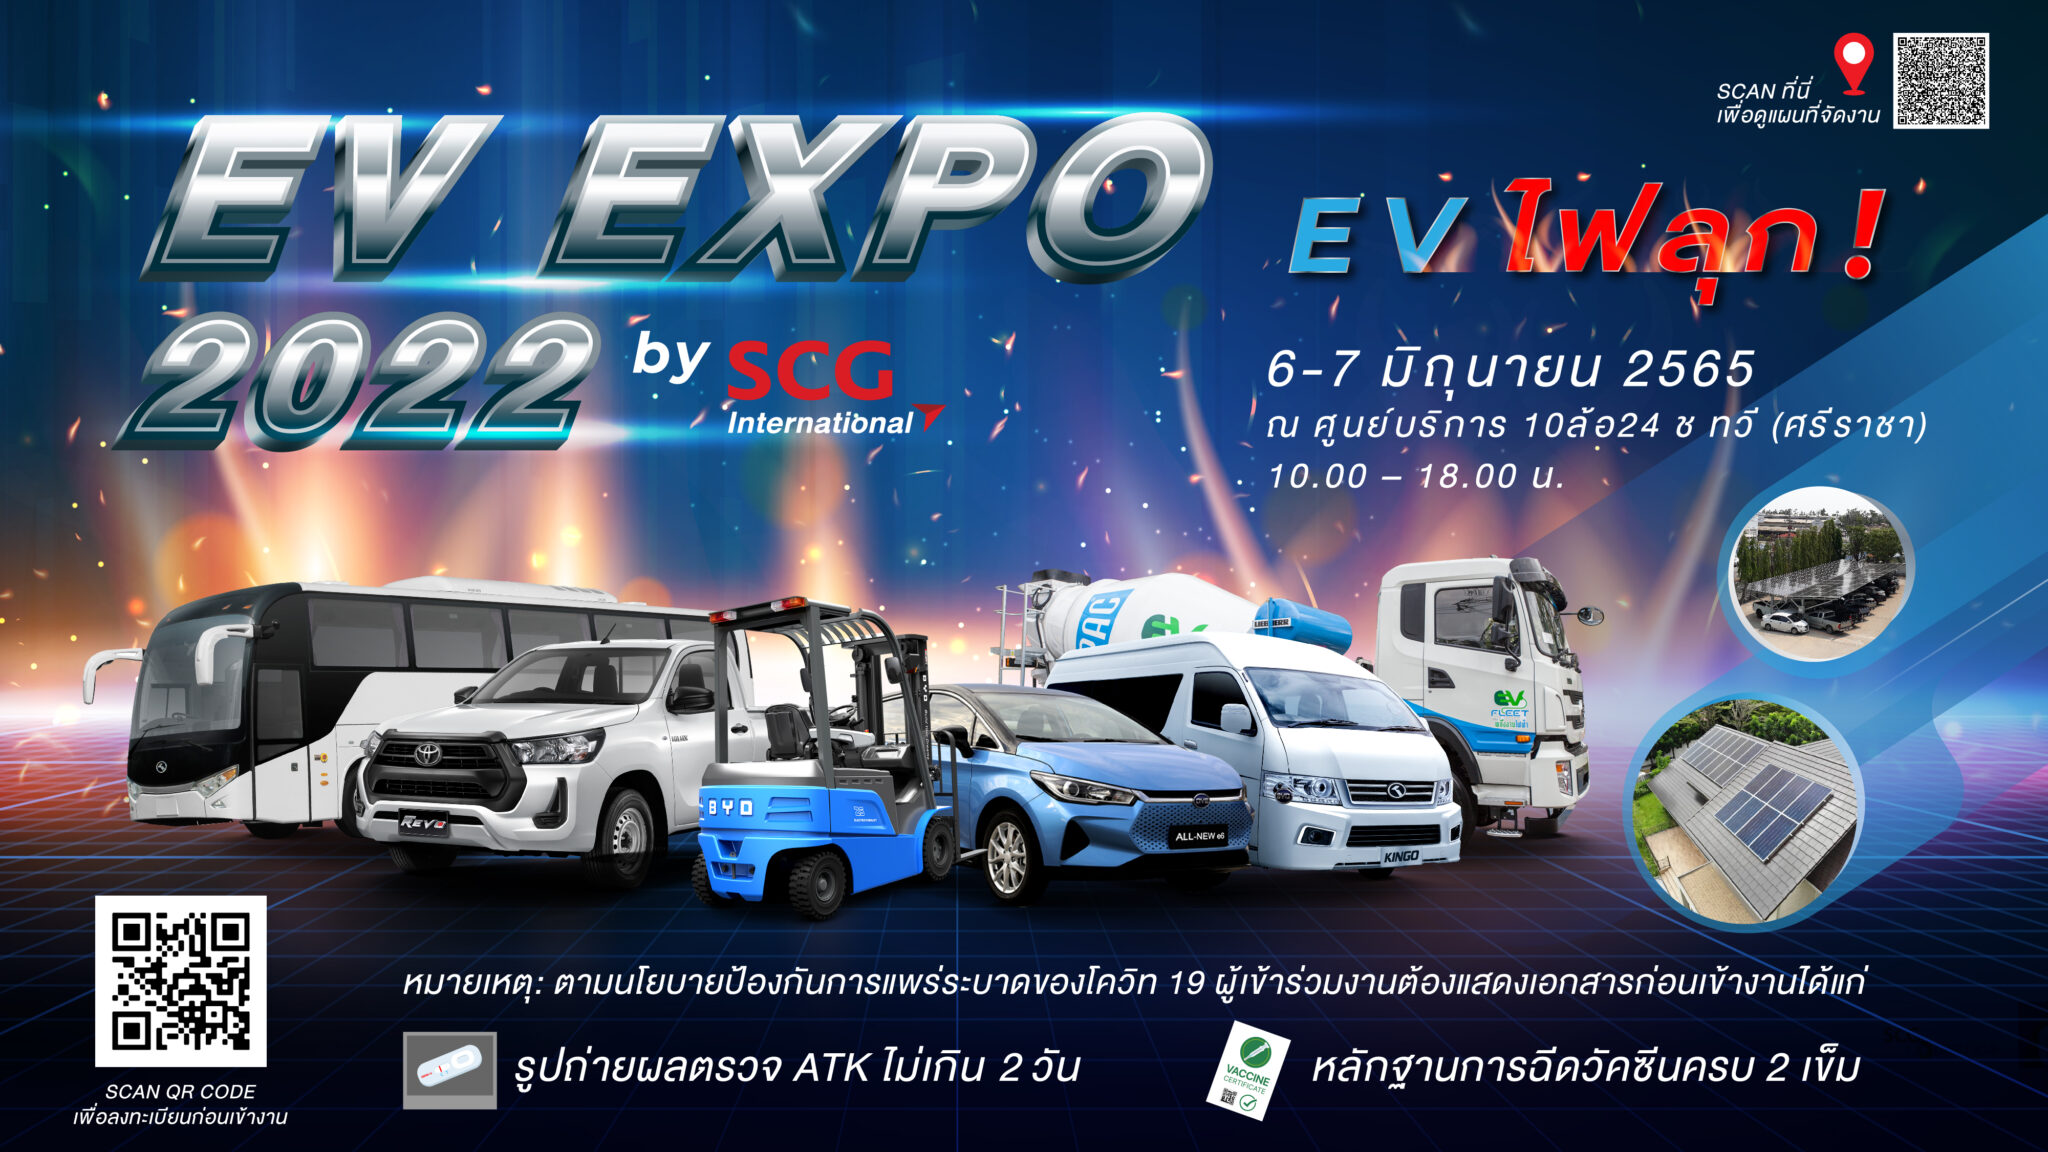 CHO ชวนร่วมงาน “EV EXPO 2022 by SCG International” 6-7 มิ.ย.นี้